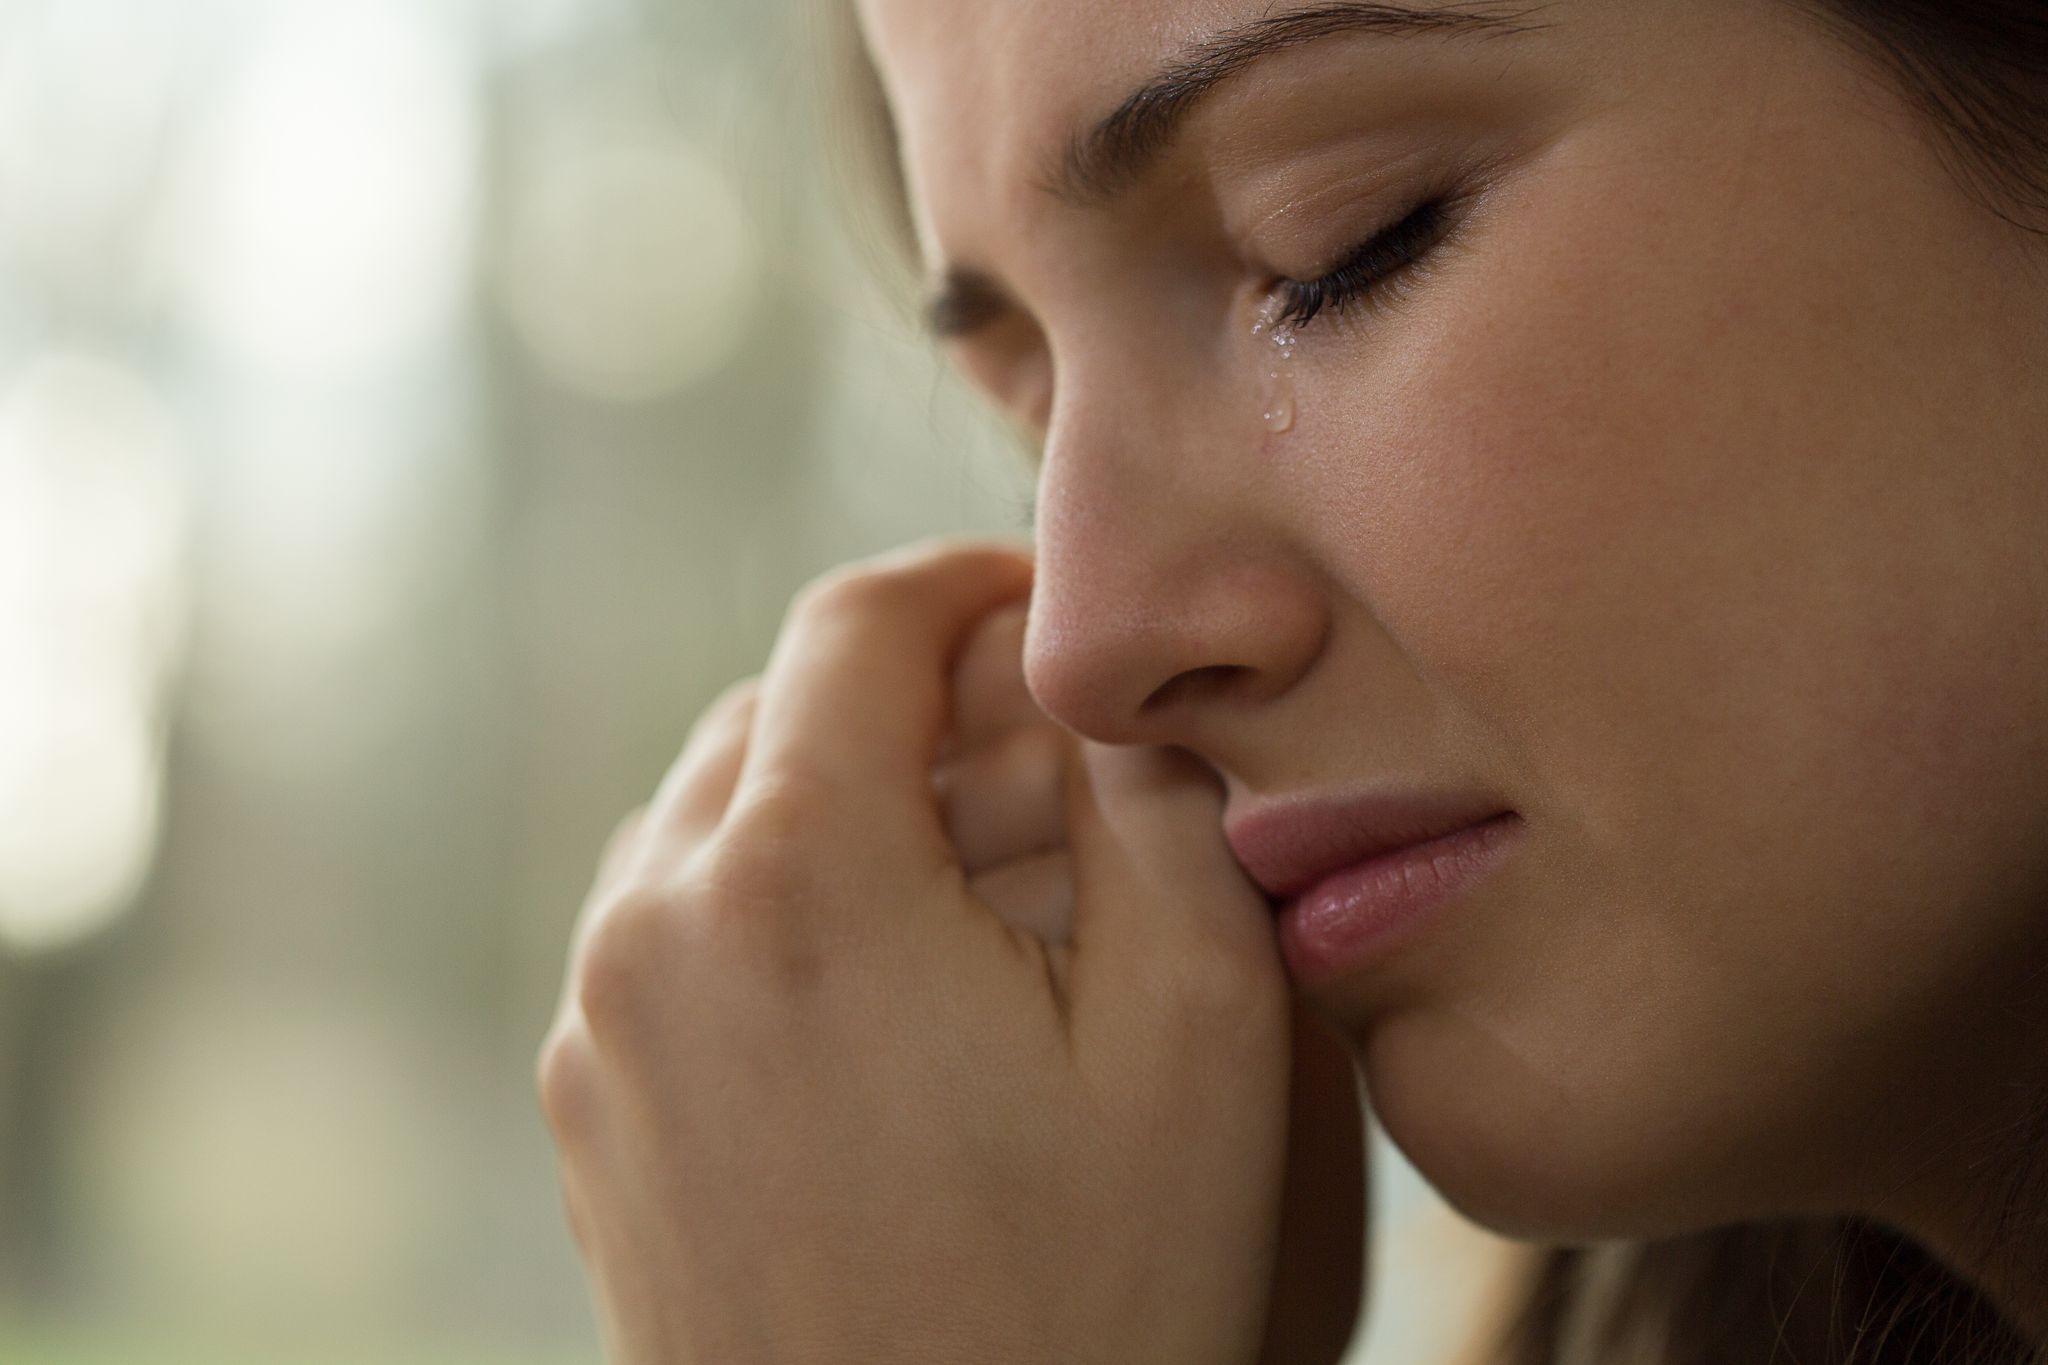 Une femme qui pleure. | Source : Shutterstock